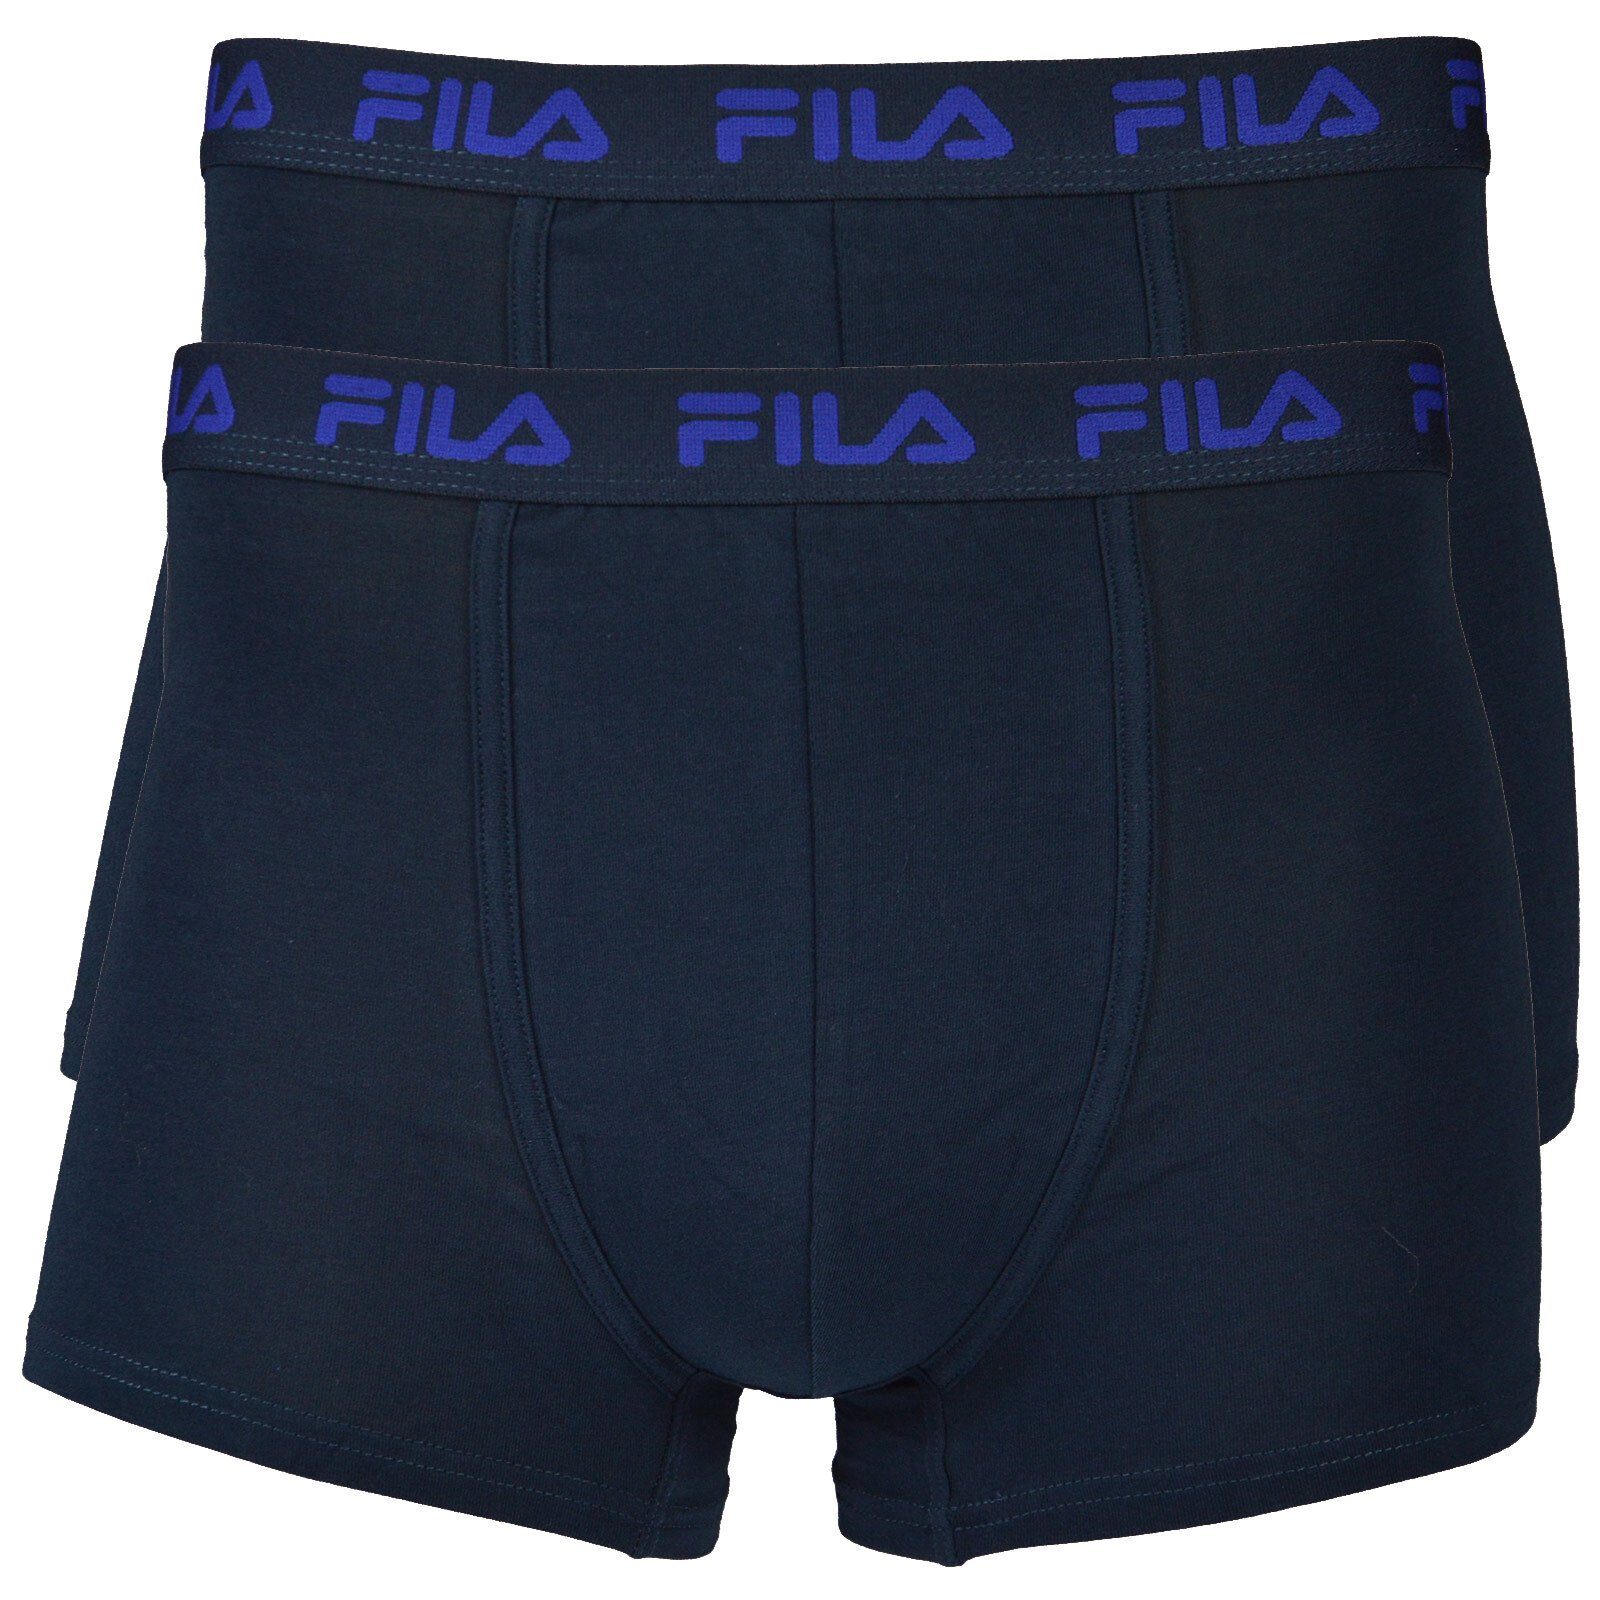 Fila Boxer Herren Boxer Shorts 2er Pack - Logobund, Cotton Marine